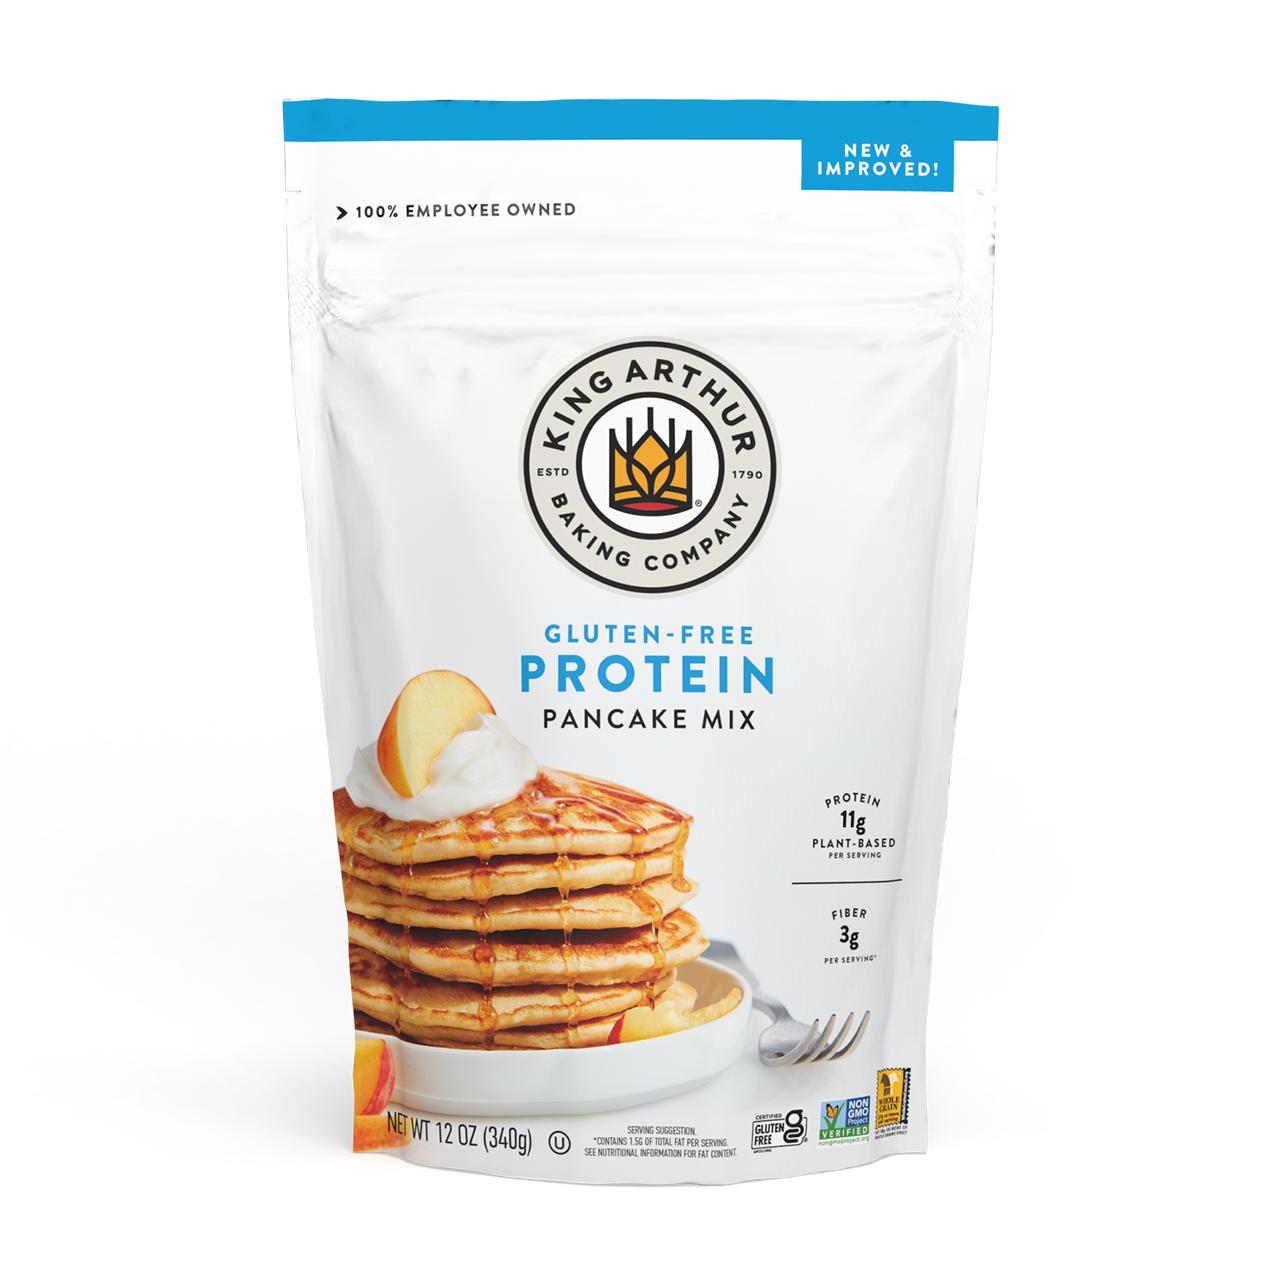 tidligere voksen pulsåre Gluten-Free Protein Pancake Mix - King Arthur Baking Company